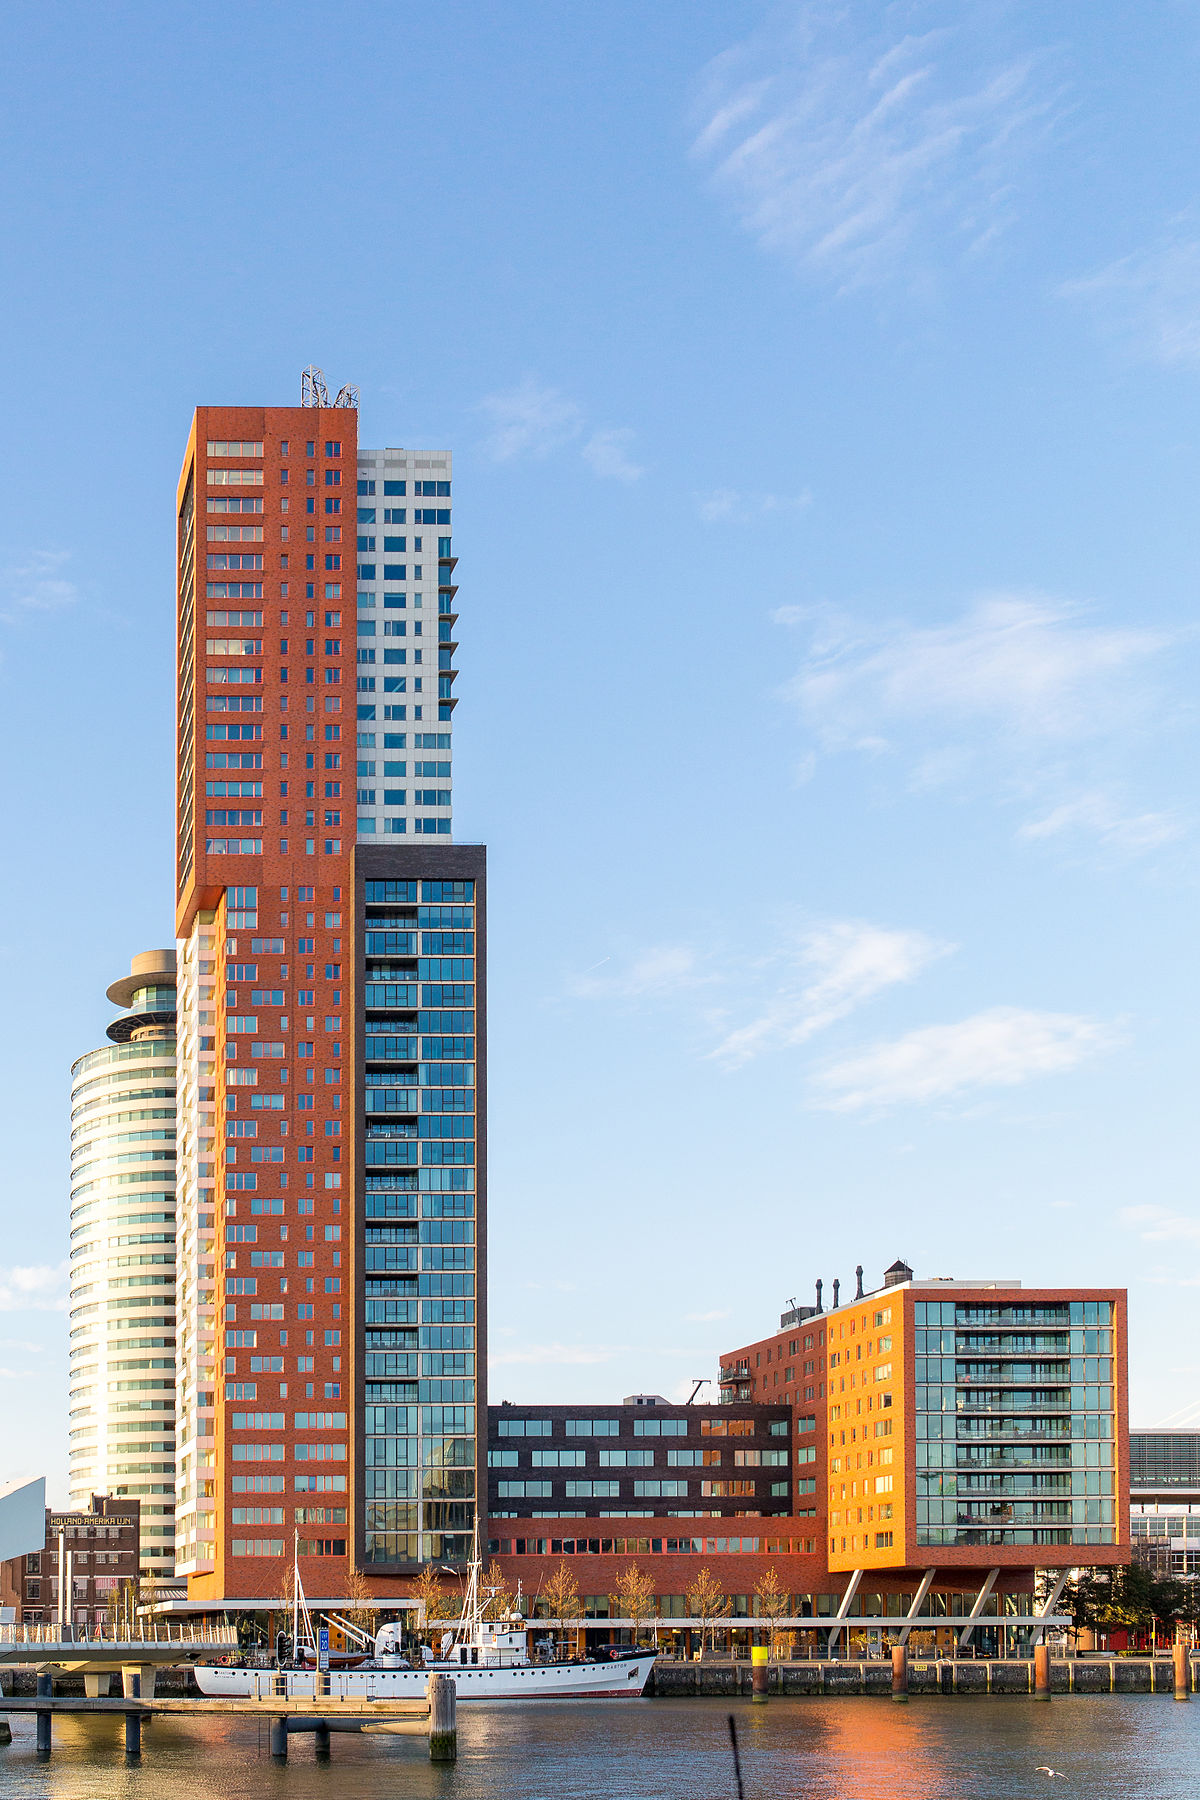 Montevideo (Rotterdam) - Wikipedia